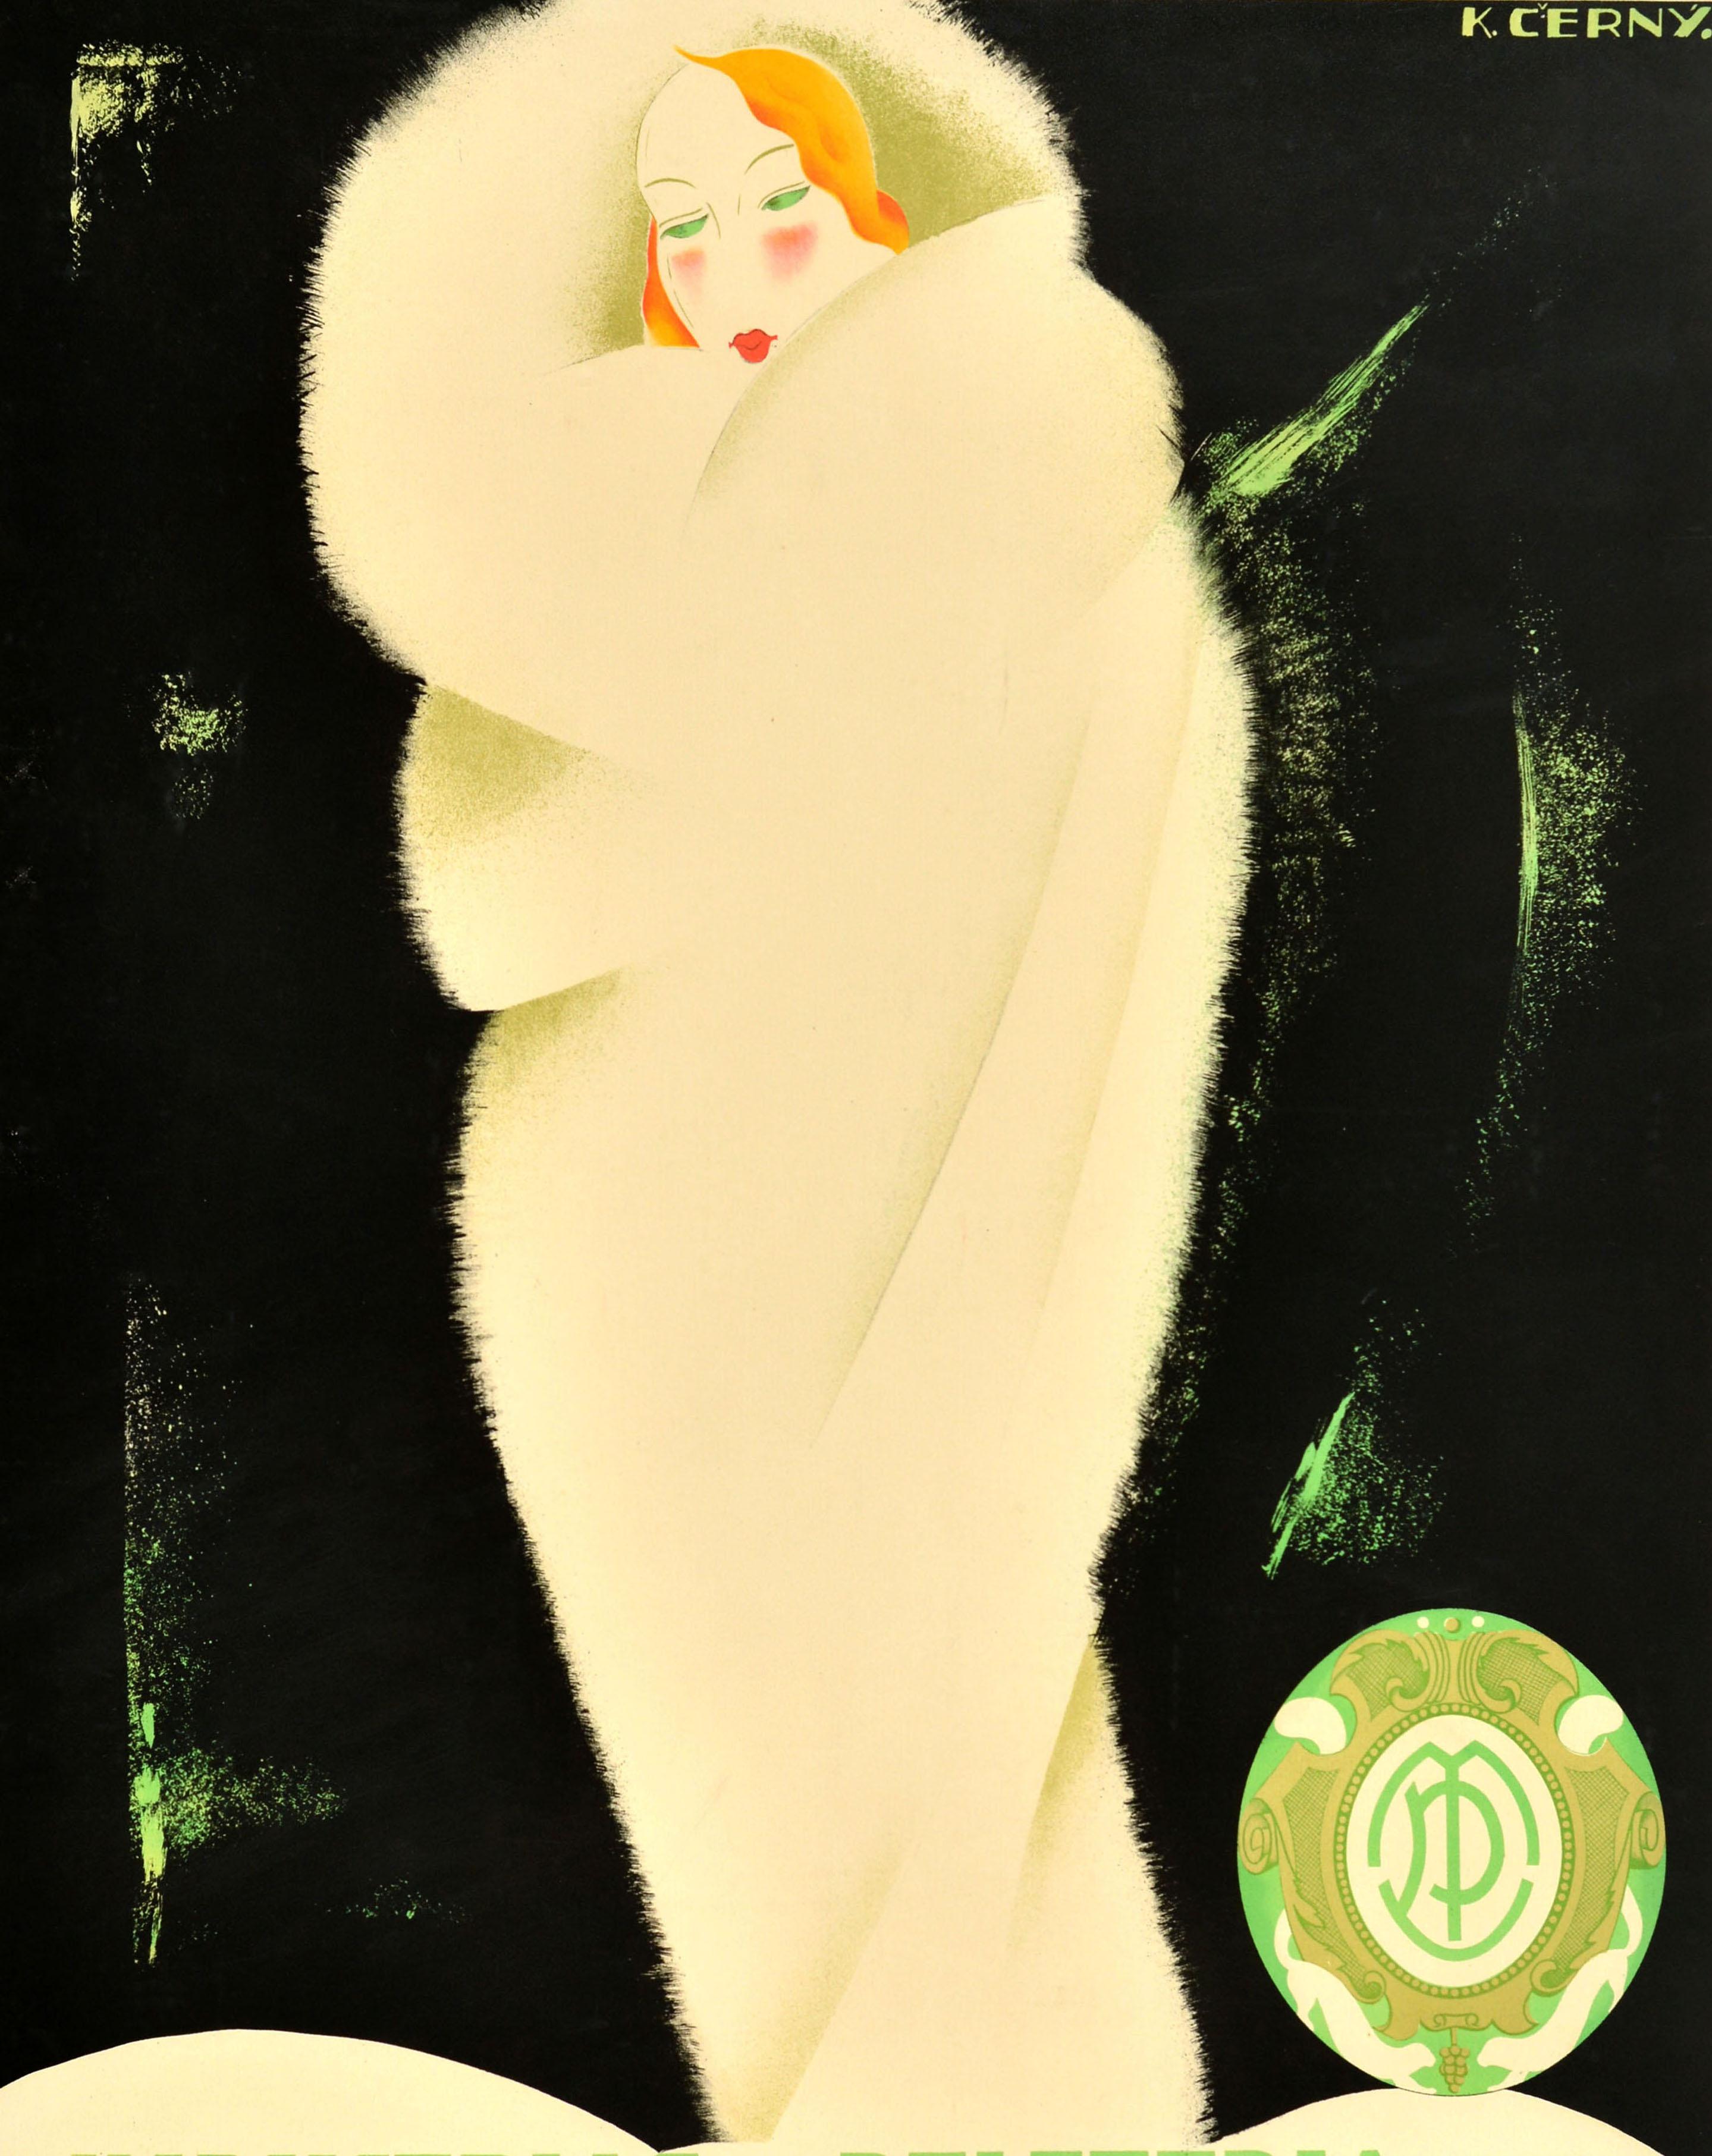 Original Vintage Spanish Advertising Poster Tapbioles Y Pirretas Fur Clothing - Print by Unknown